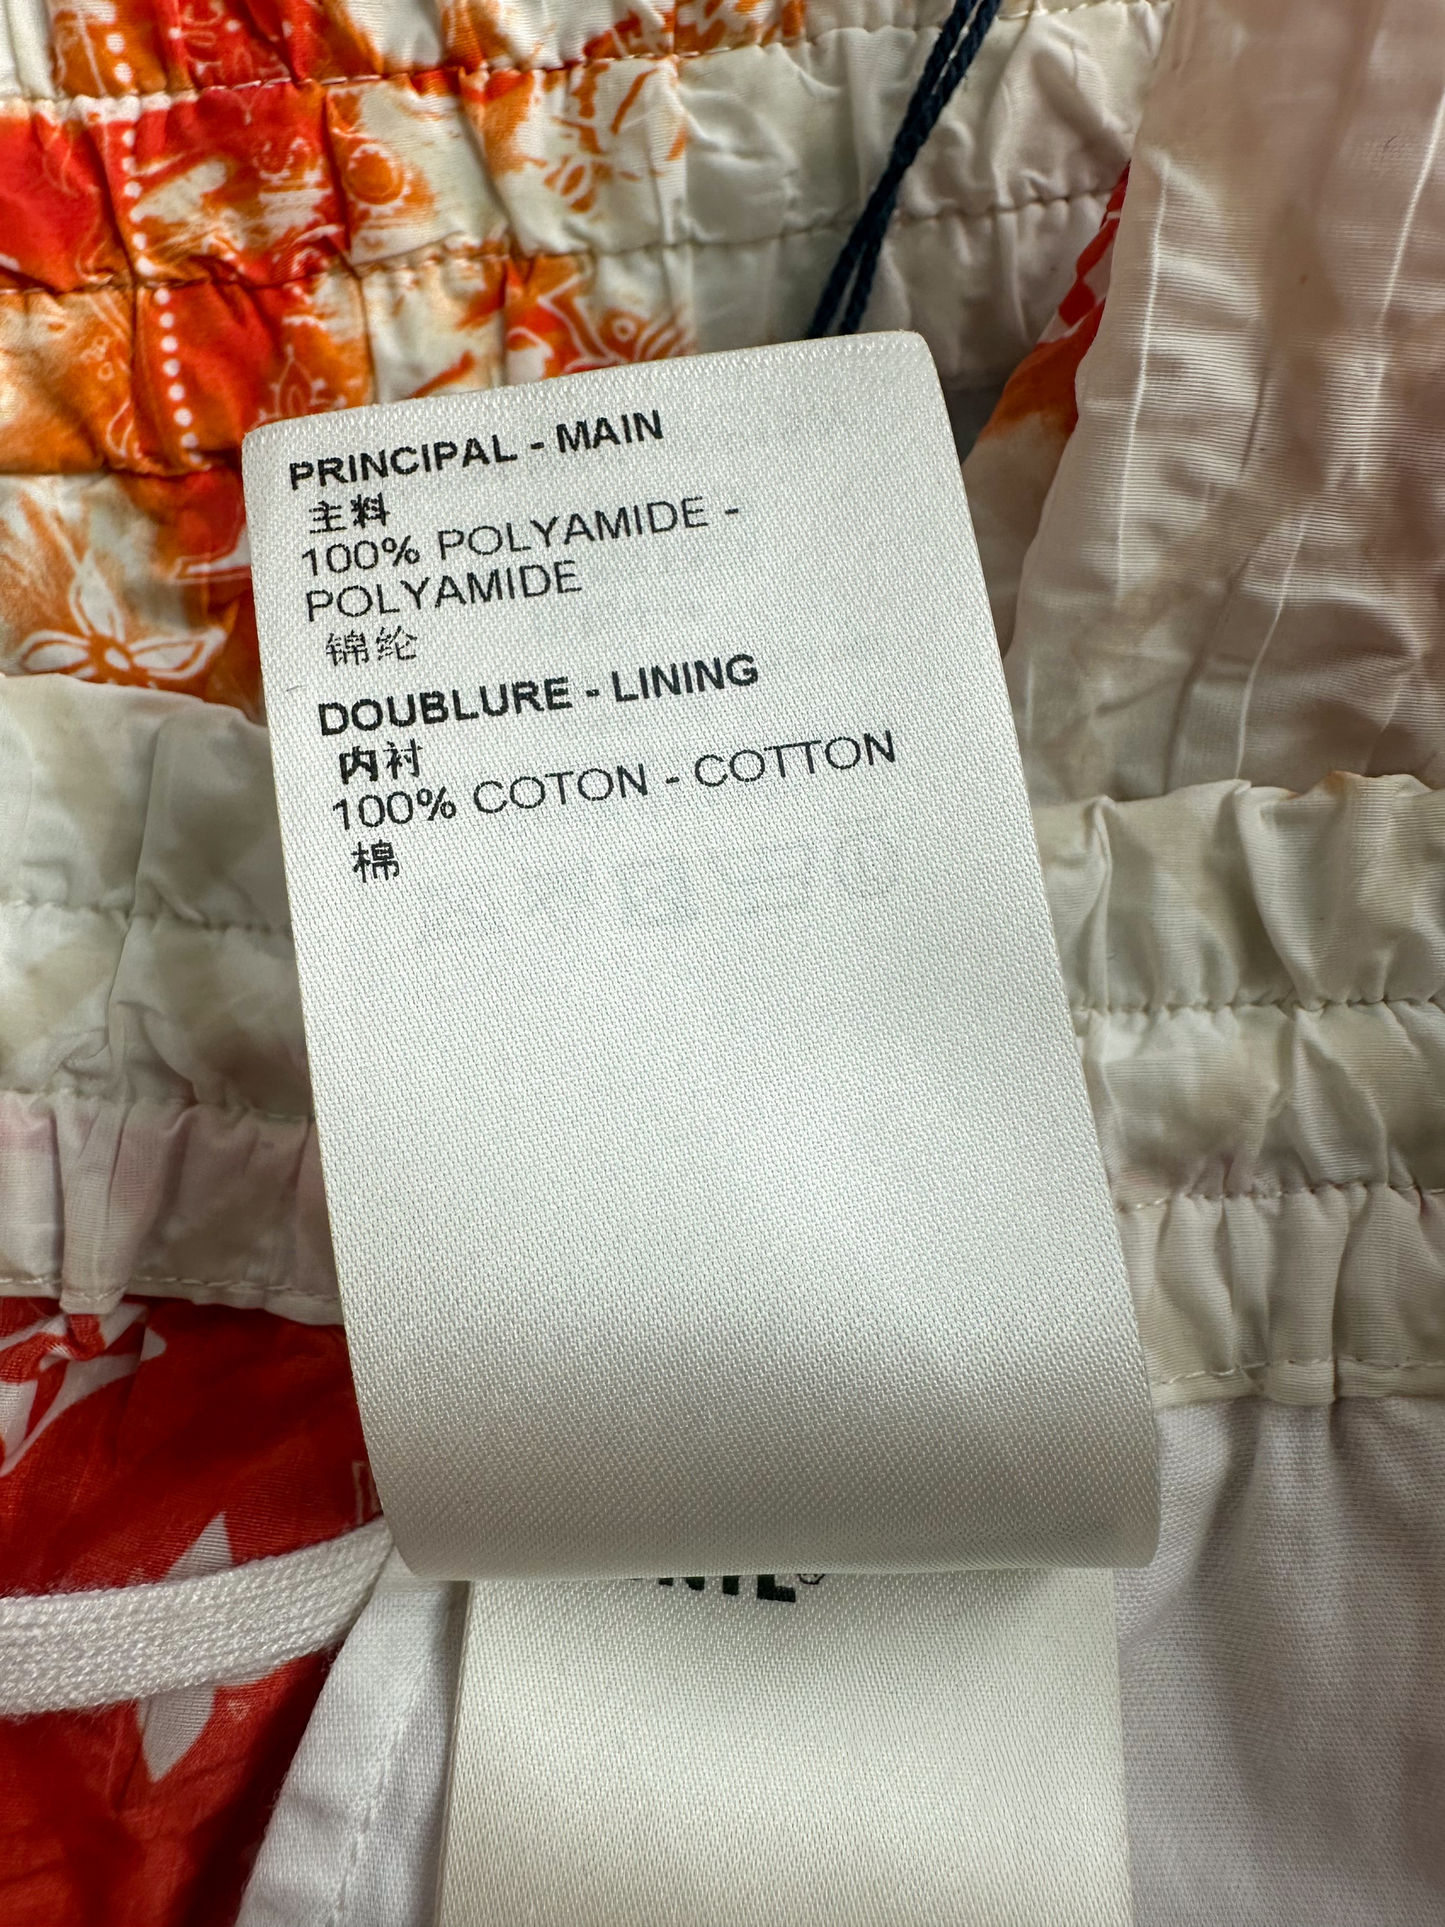 Louis Vuitton Monogram Nylon Bandana Orange Shorts – Cheap